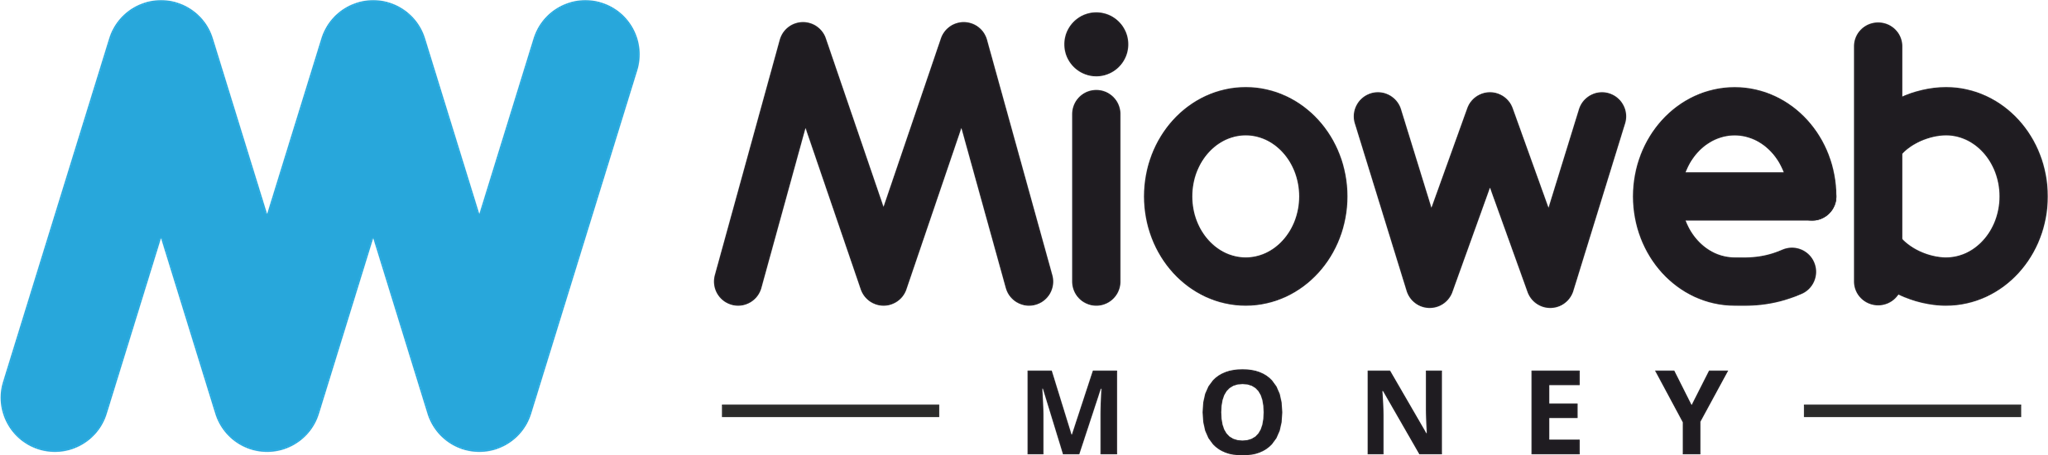 Mioweb - Homepage